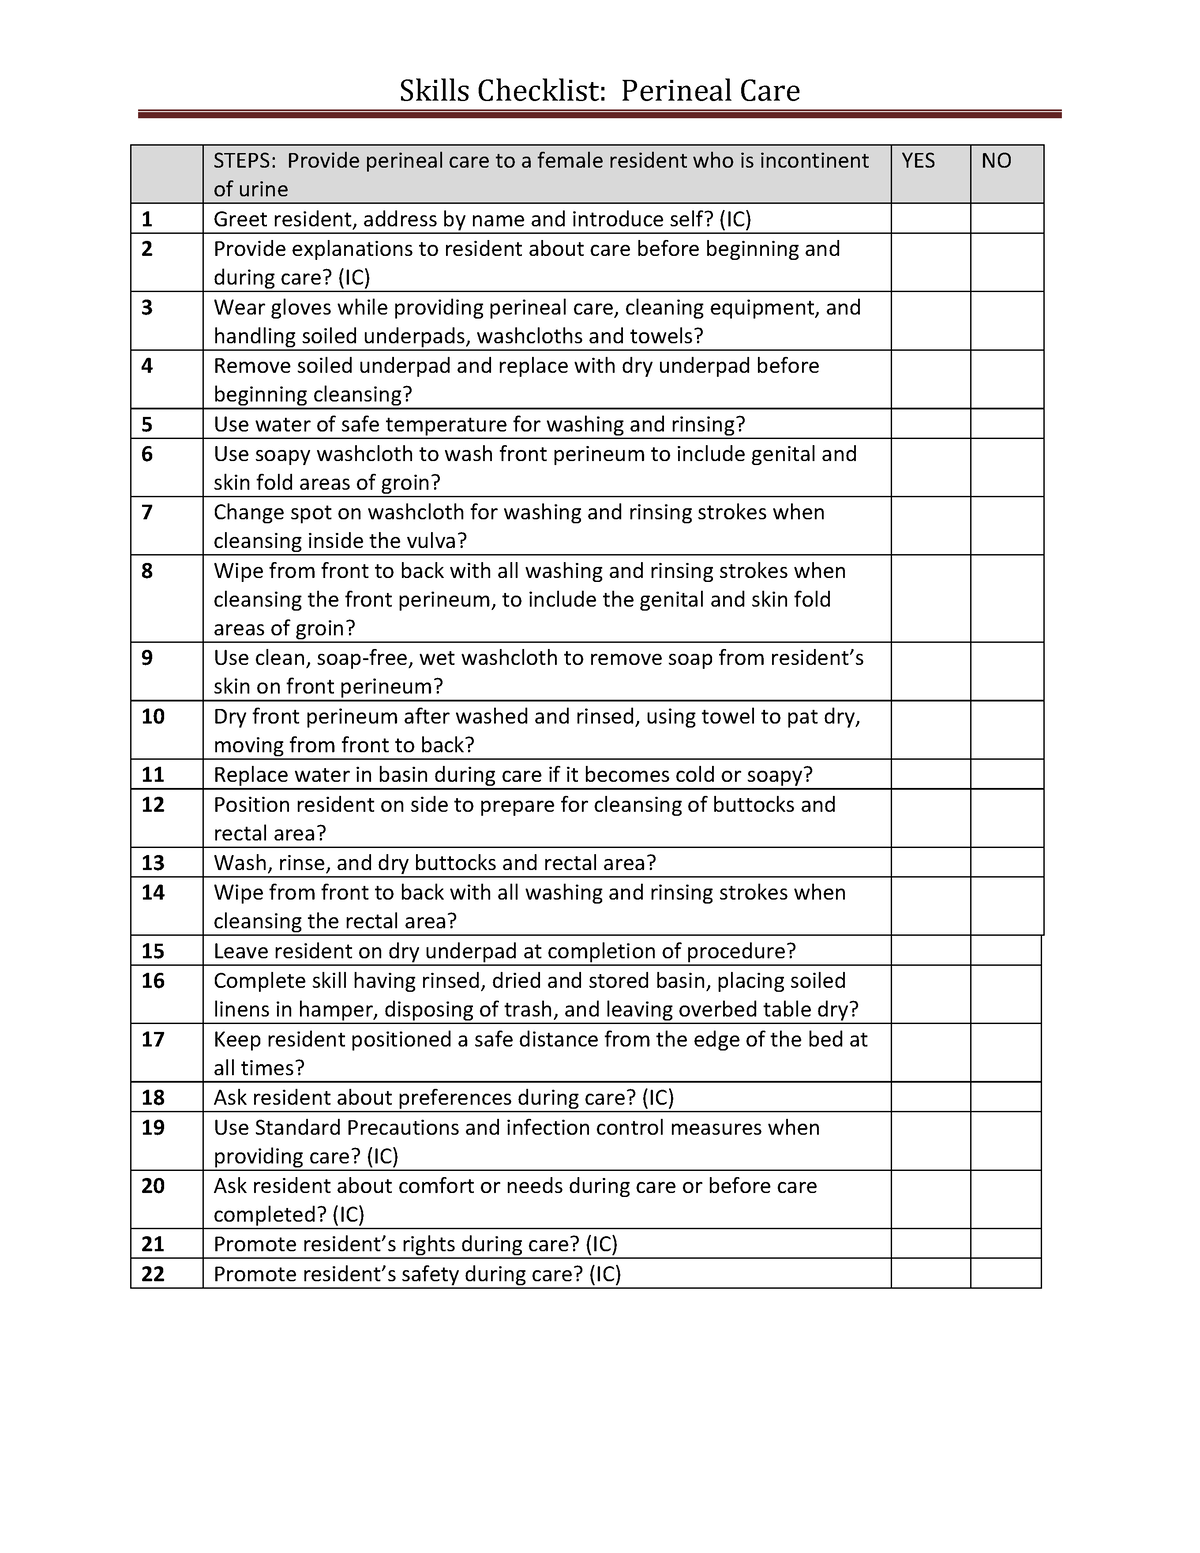 cna-perineal-care-checklist-skills-checklist-perineal-care-steps